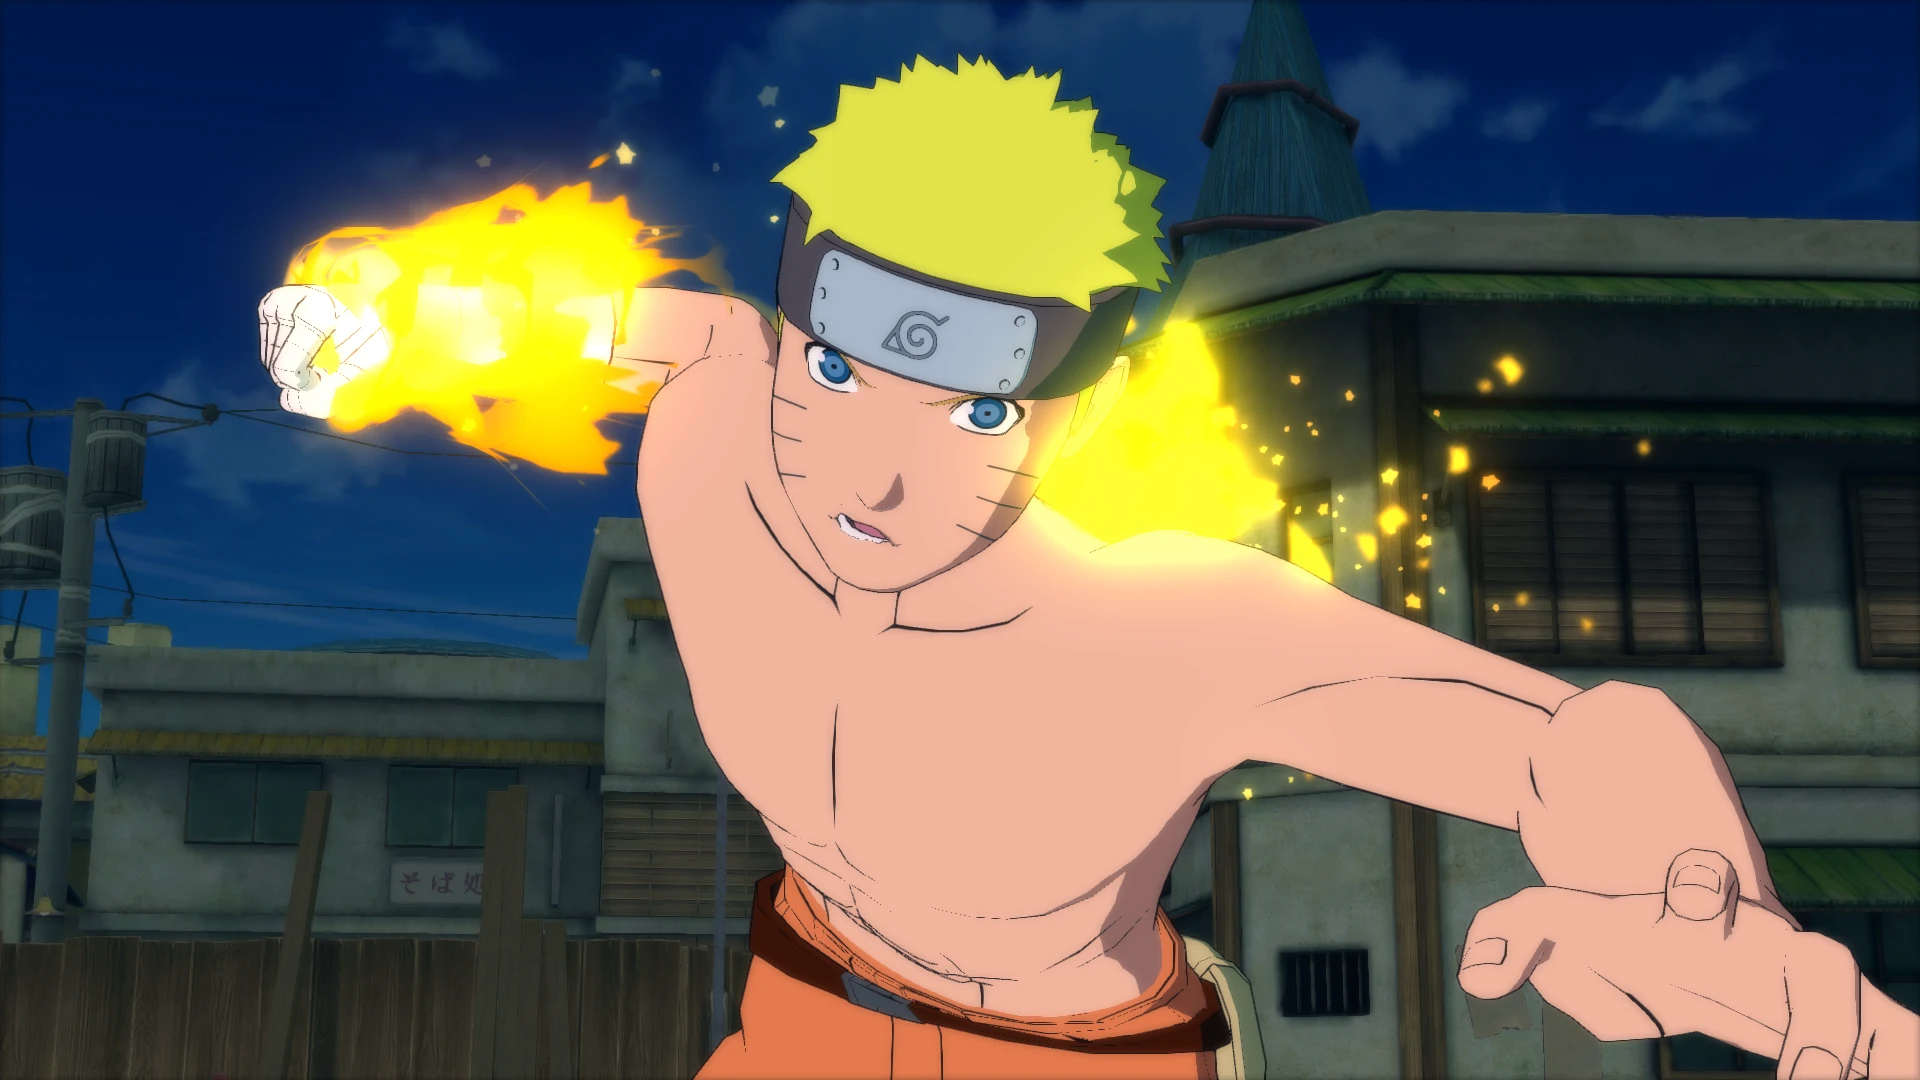 Naruto Shippuden: Ultimate Ninja Storm 4 Nexus - Mods and Community